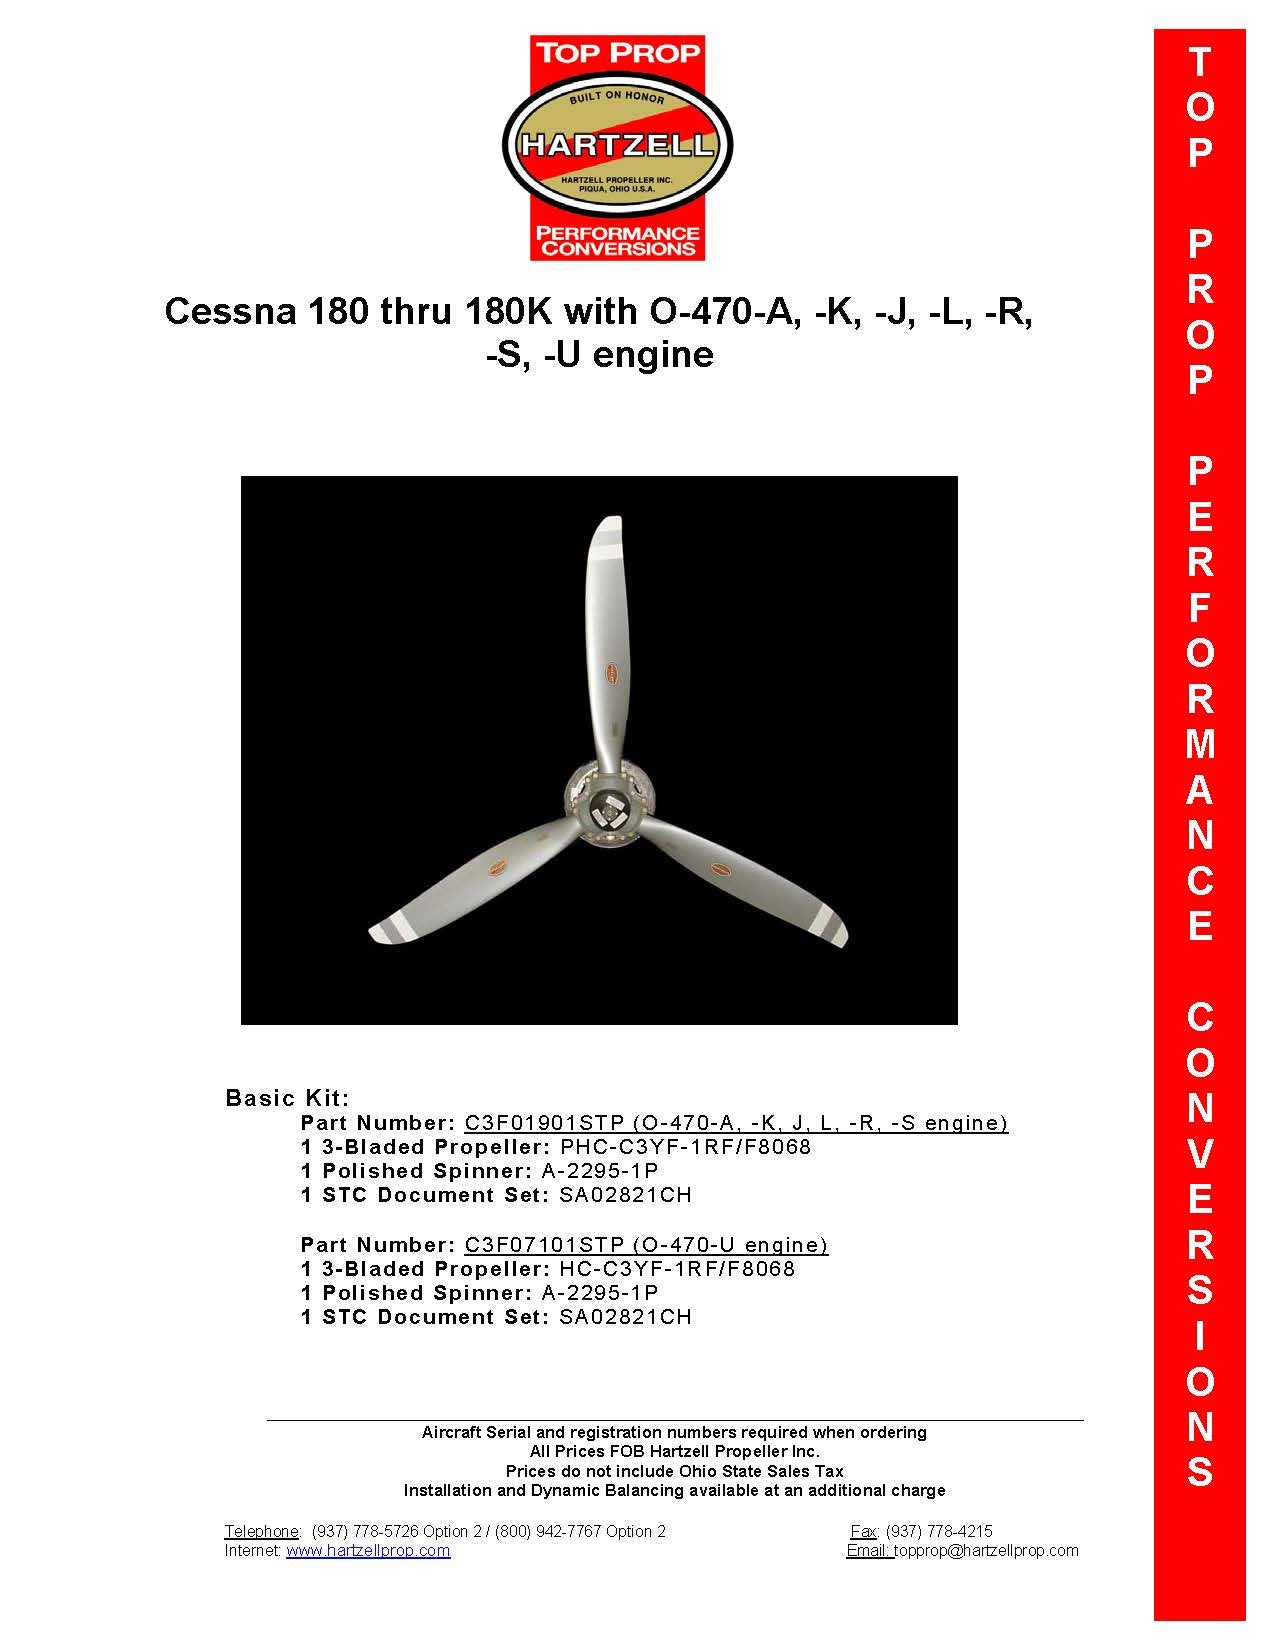 CESSNA-180-C3F01901STP-PAGE-1